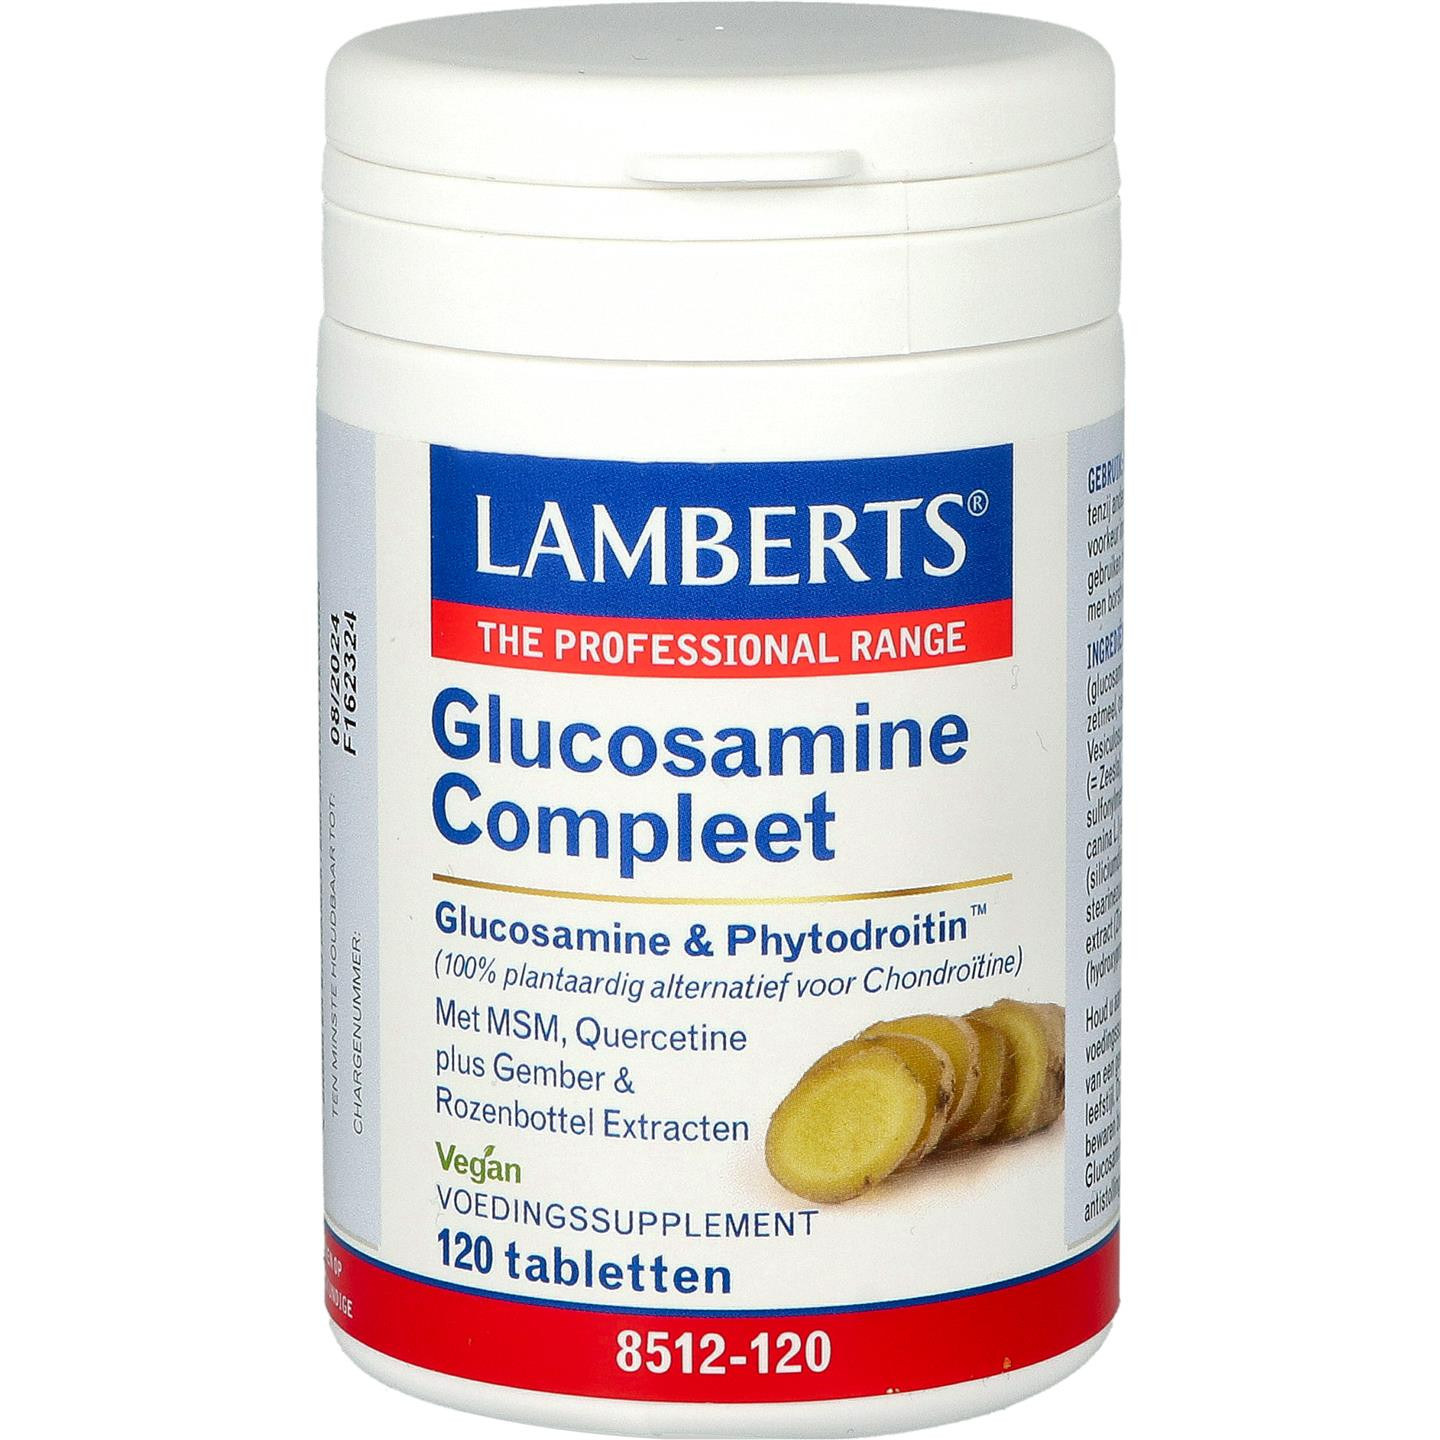 Glucosamine Compleet Vegan